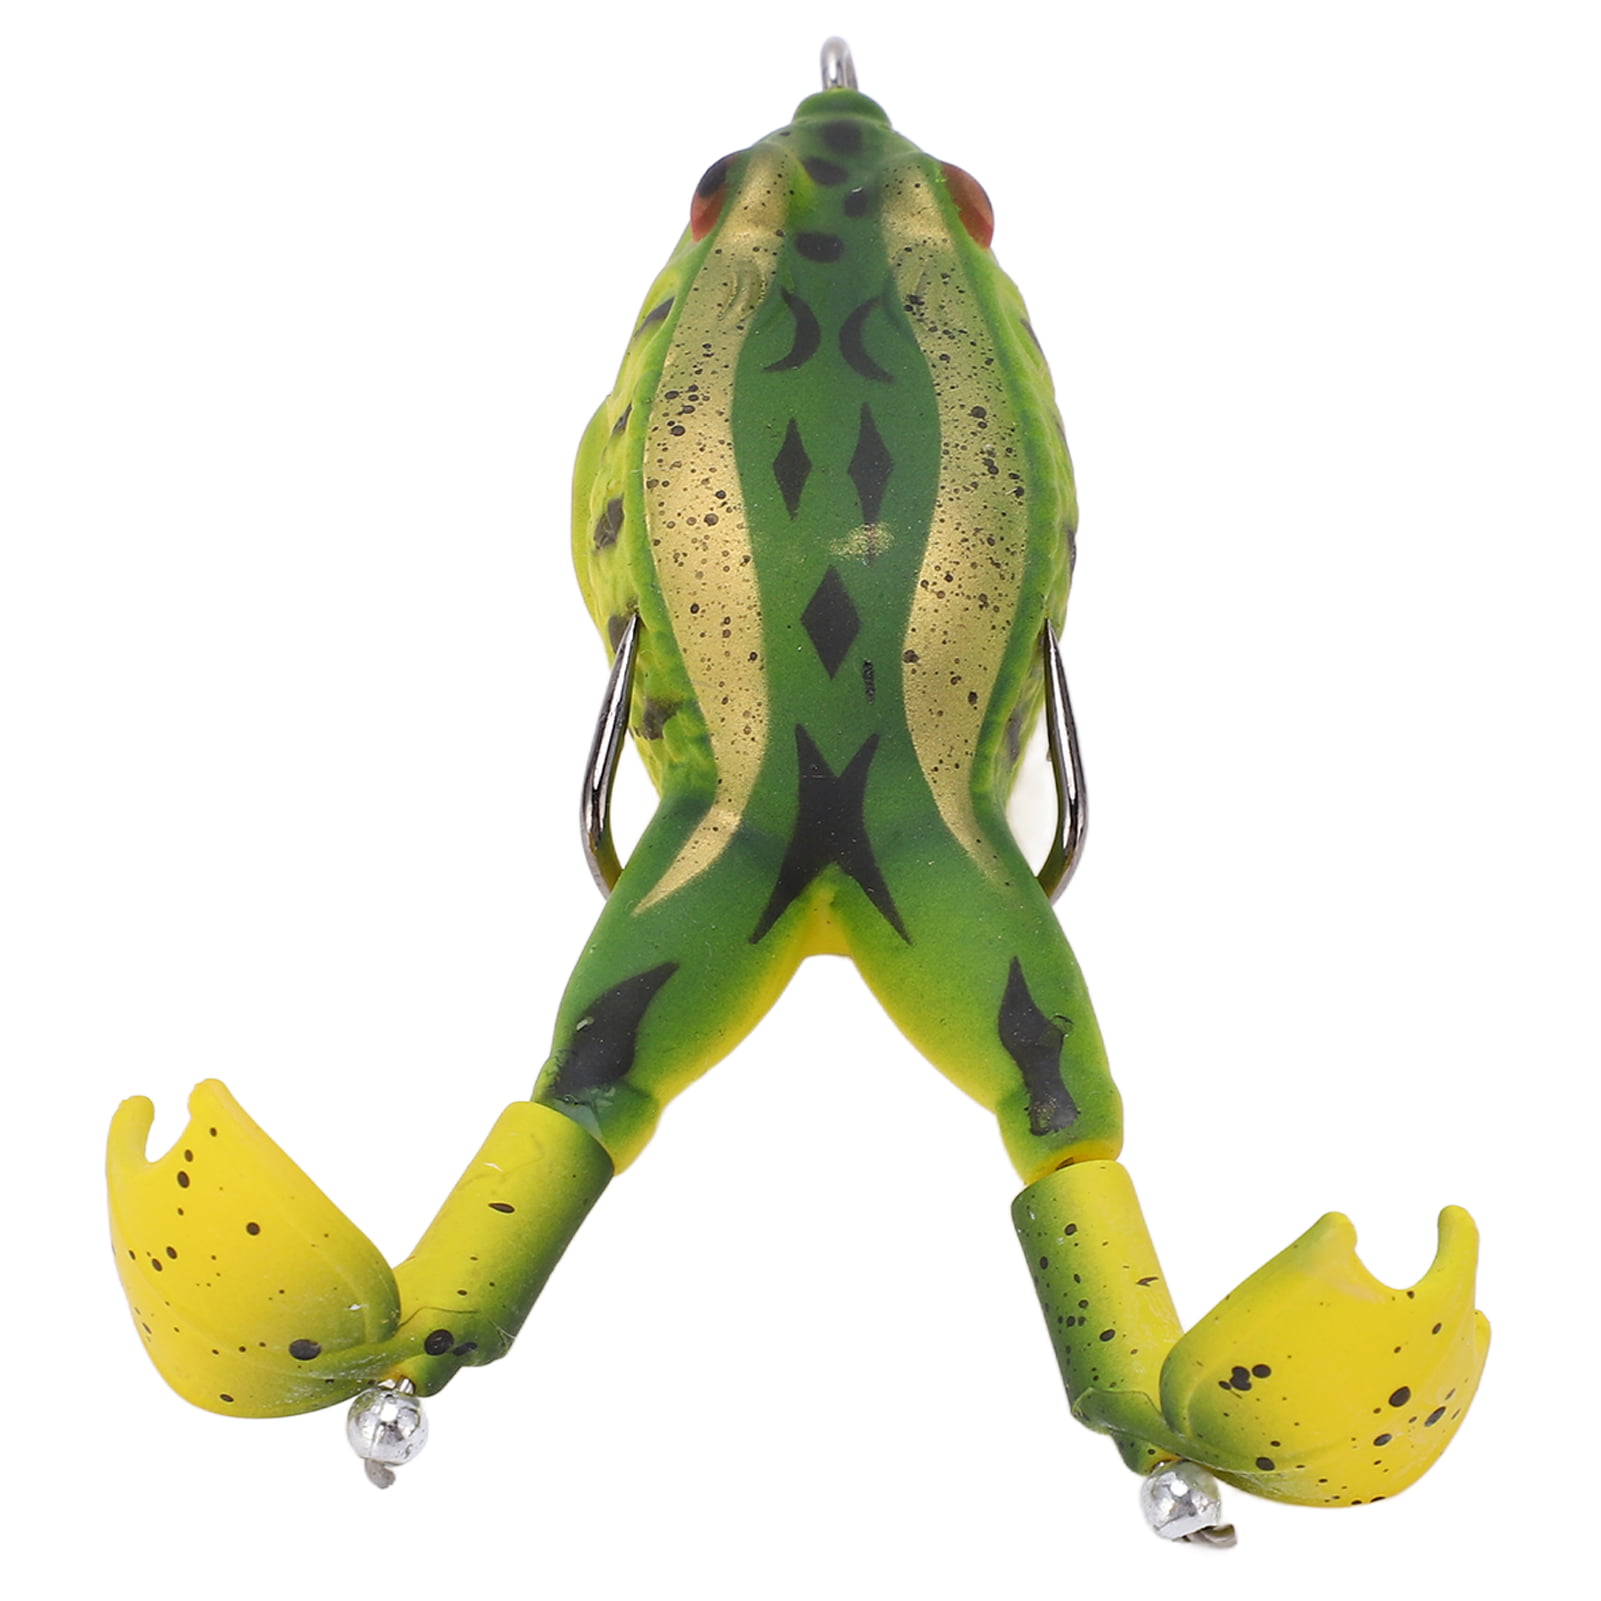 The Frog Multi-Function Propeller Balancer 